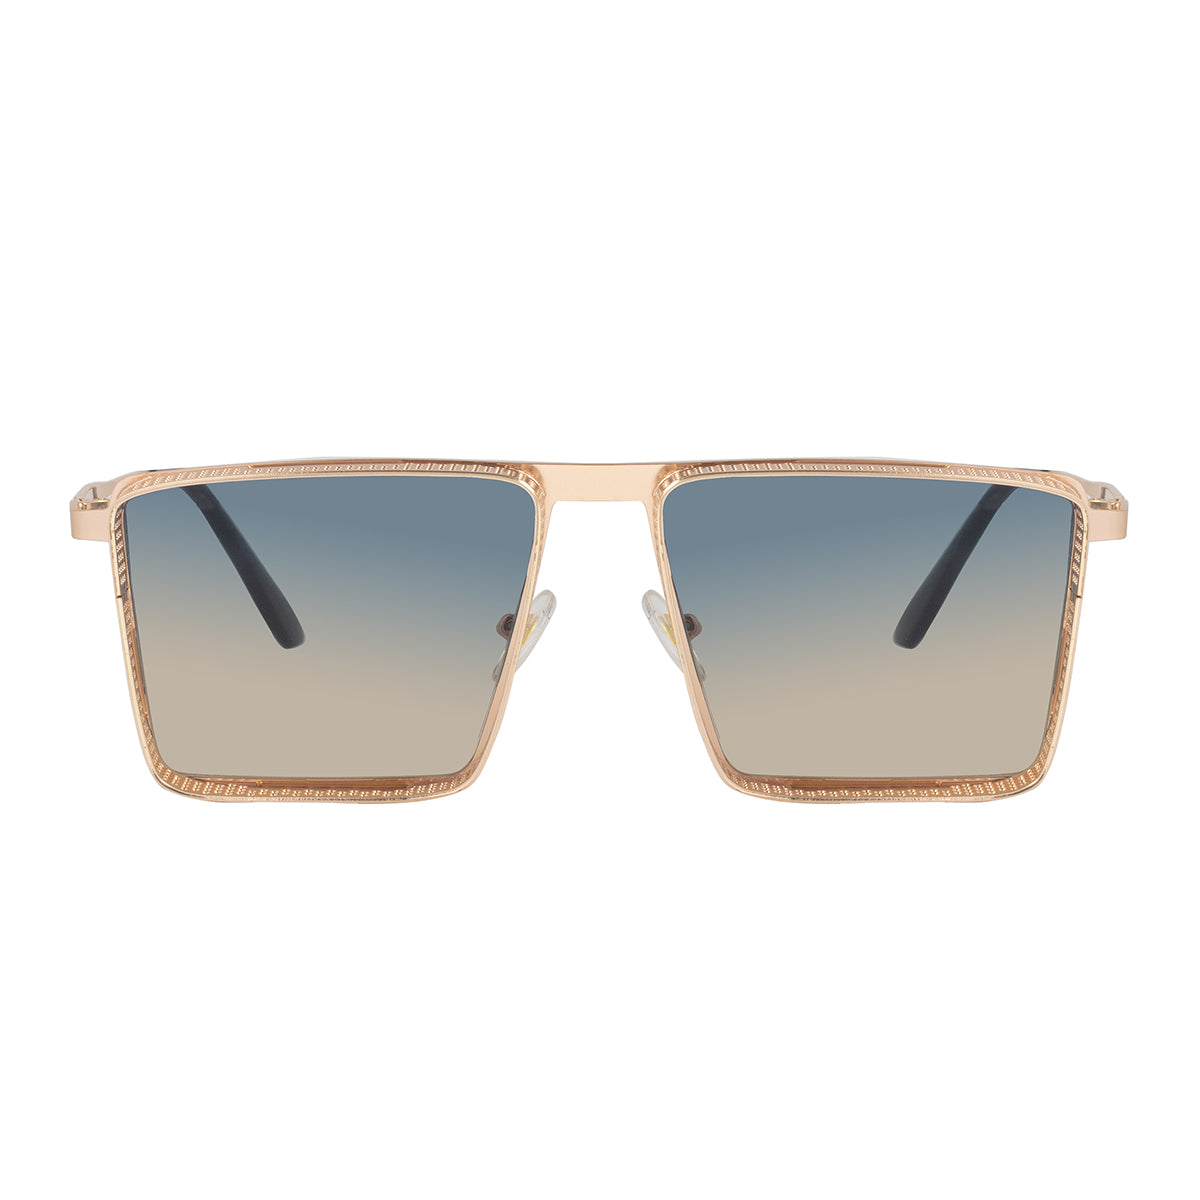 Karl Street Sunglasses